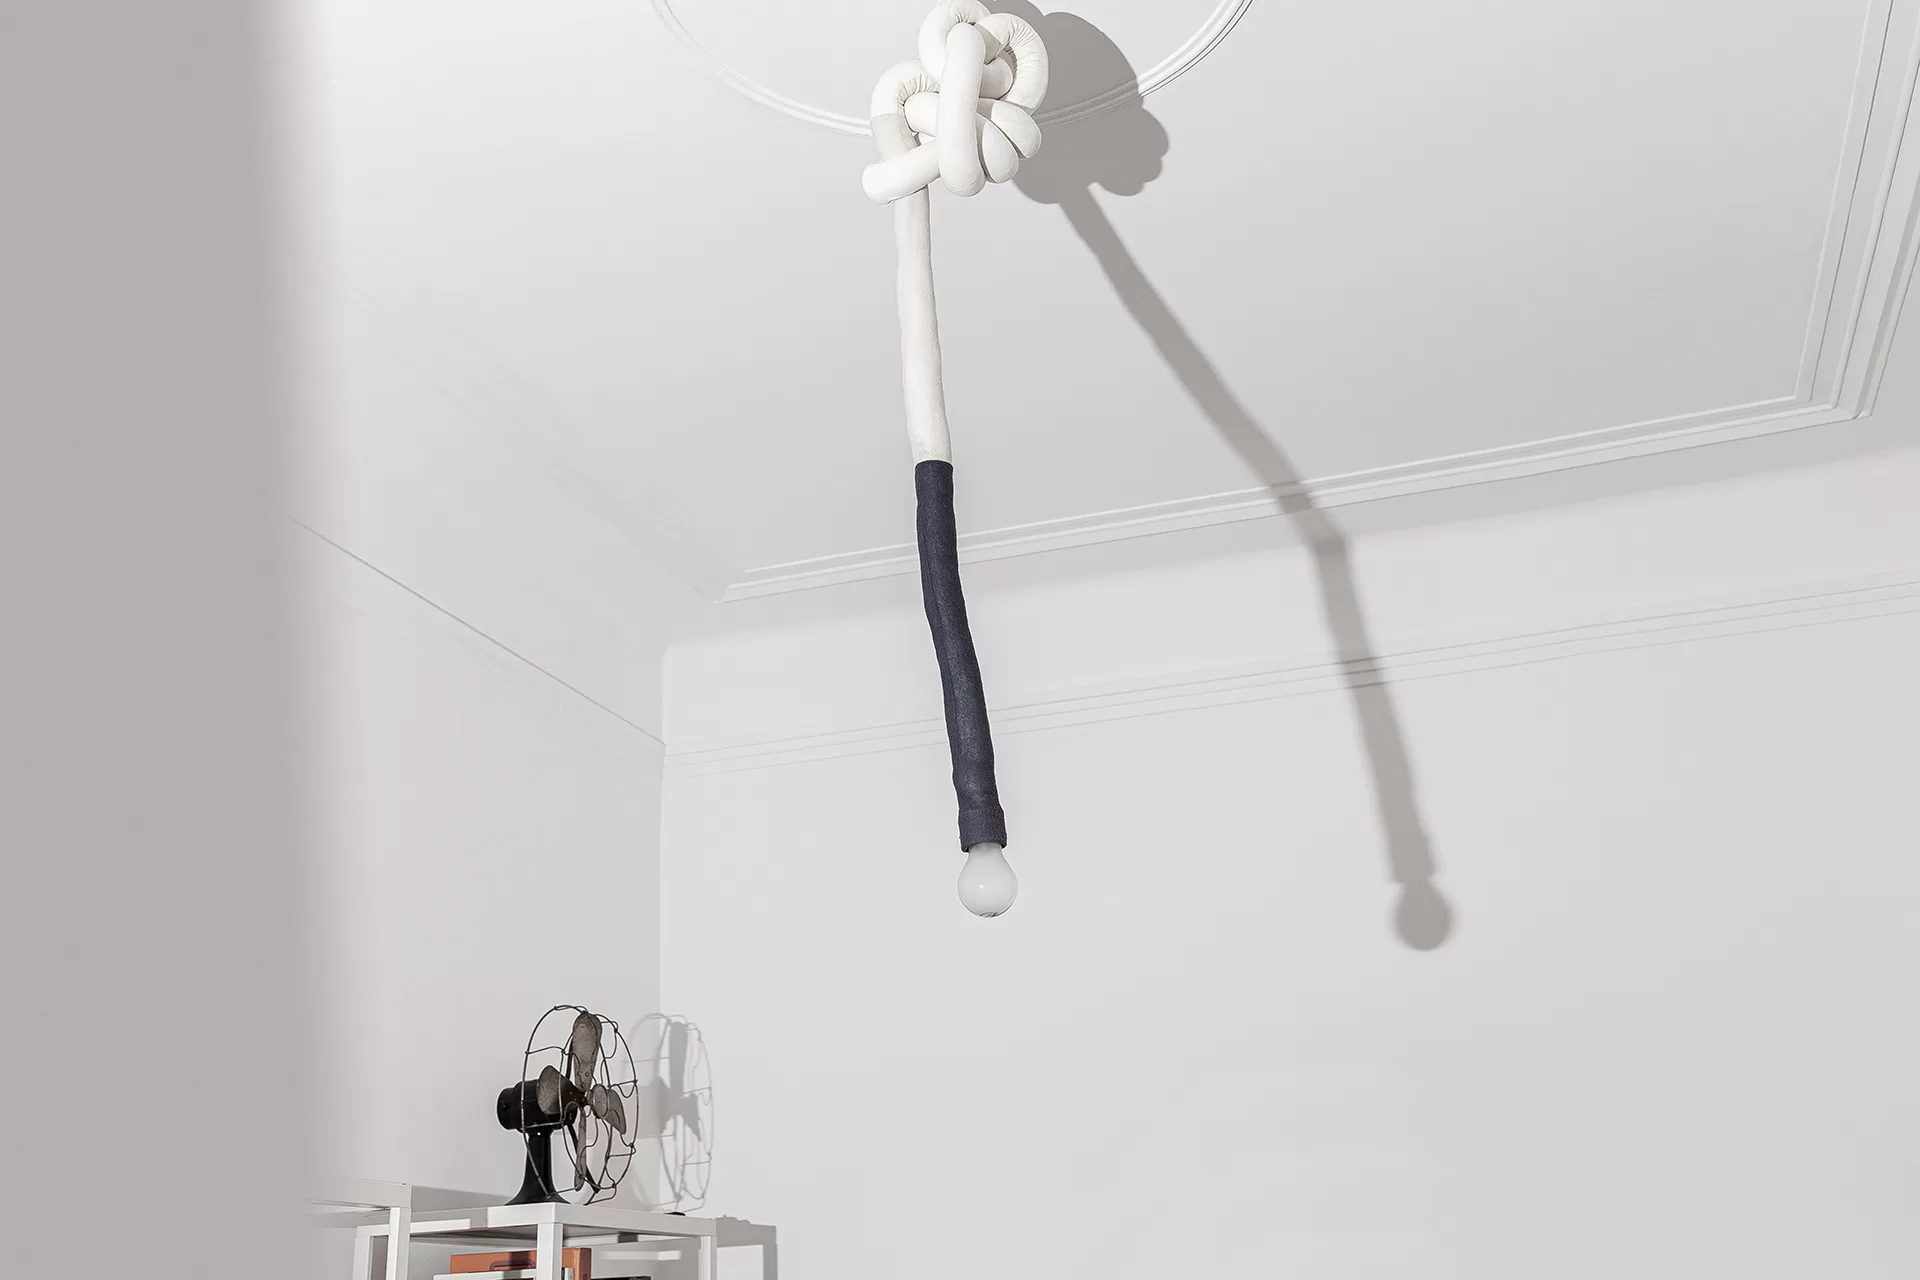 Tie_Lamp Updated - DESIGN BY MIGUEL SOEIRO